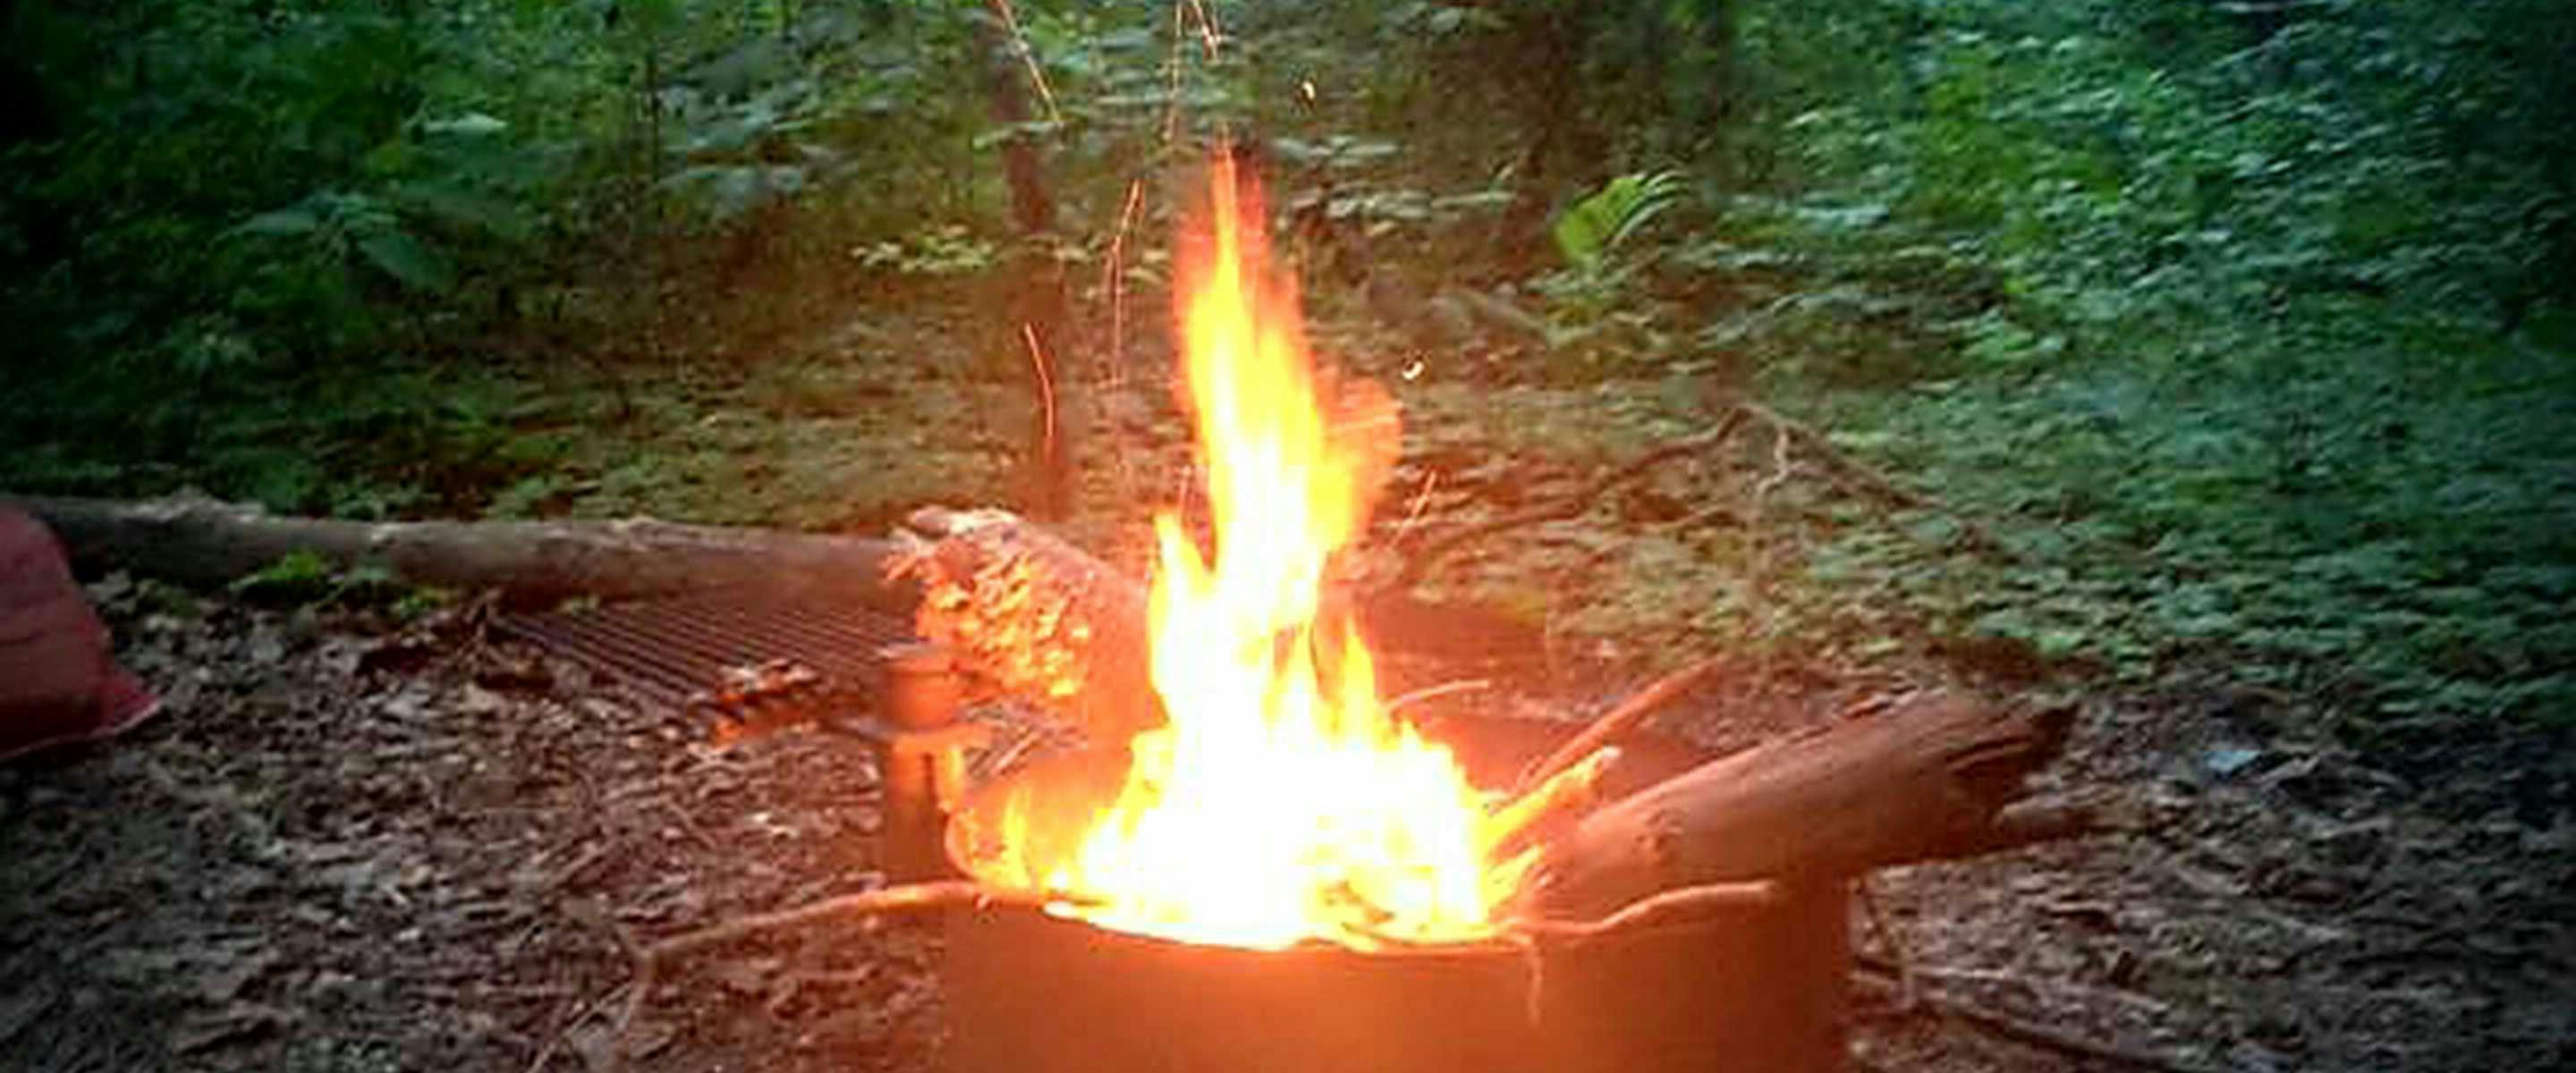 photo of warm orange campfire